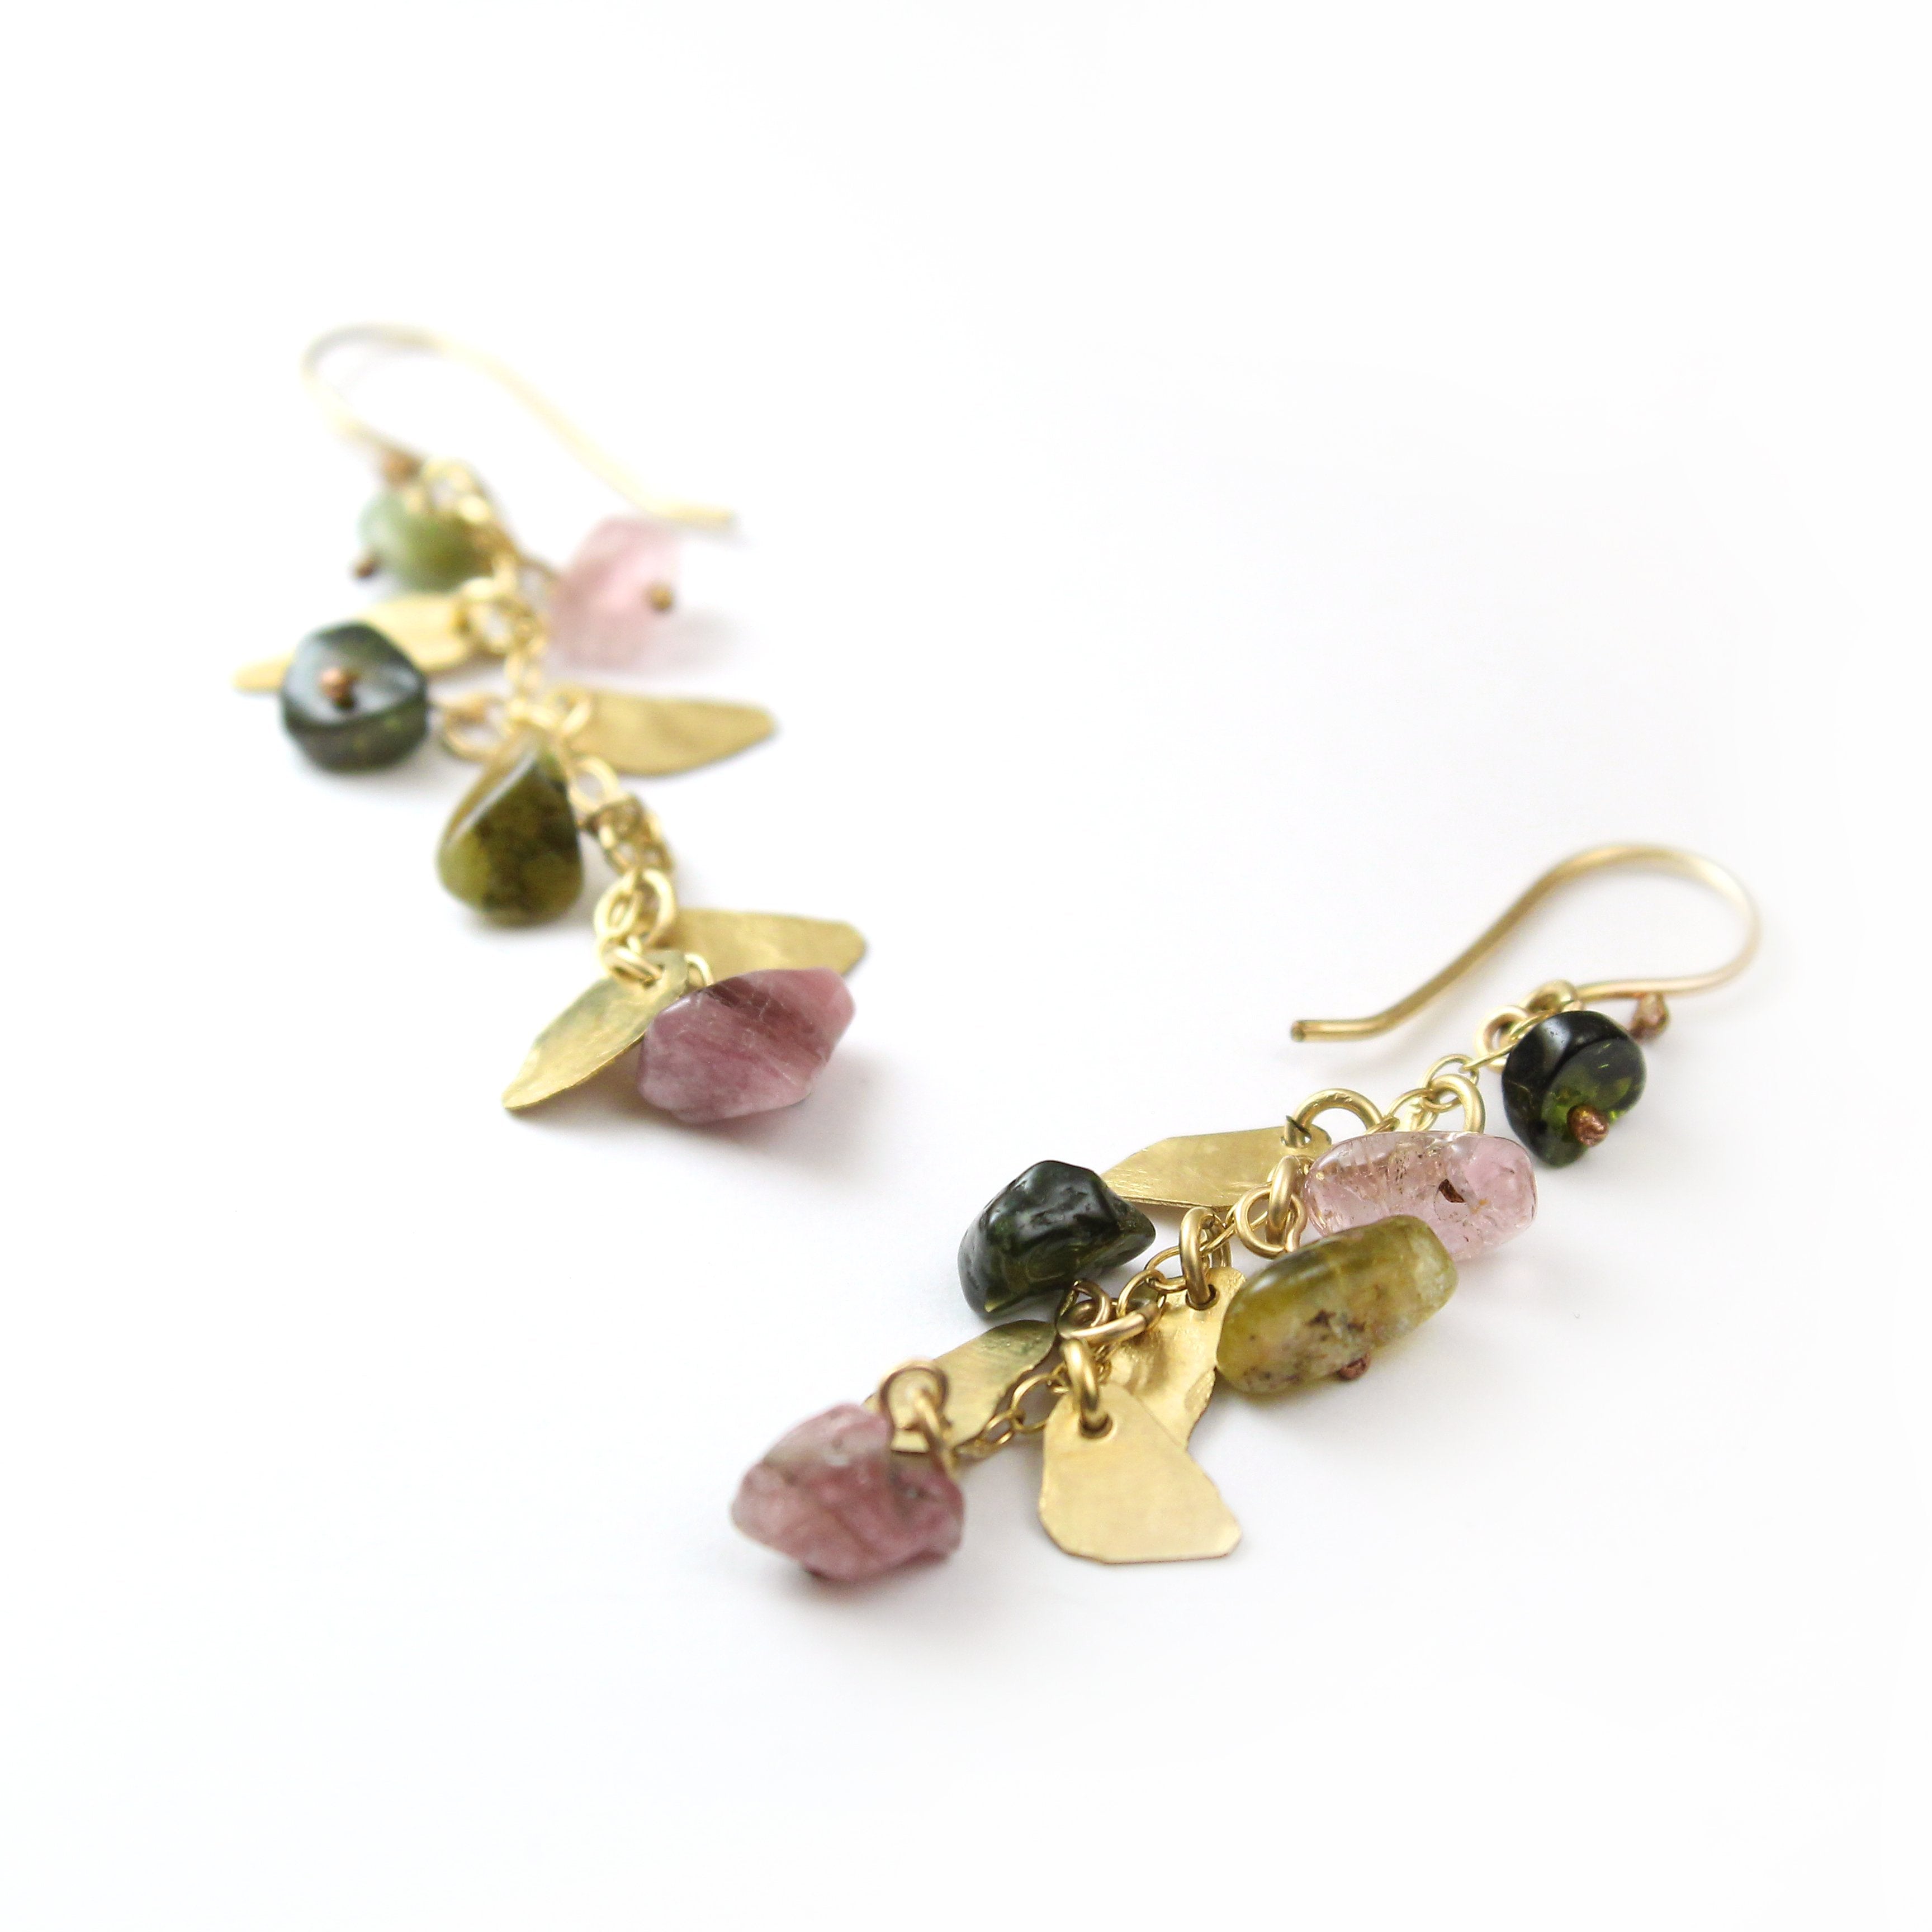 Gold filled Leaves & Tourmaline Gemstones Elegant Earrings - Shulamit Kanter